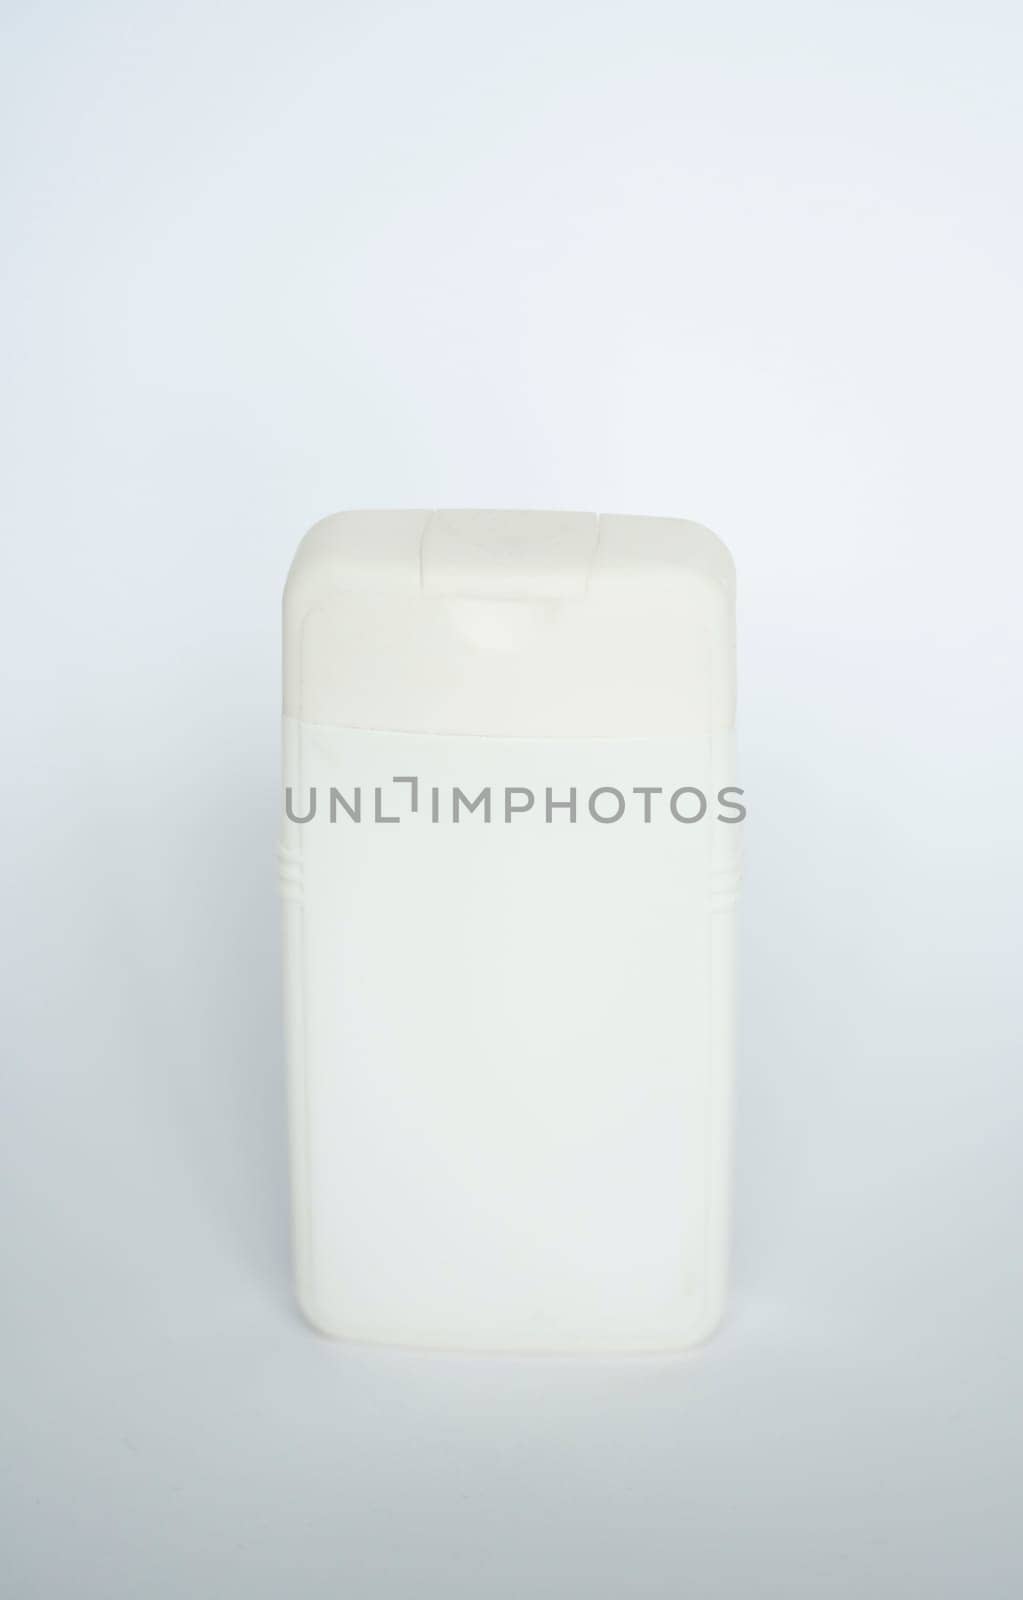 White square bottle for liquid soap, shampoo, gel